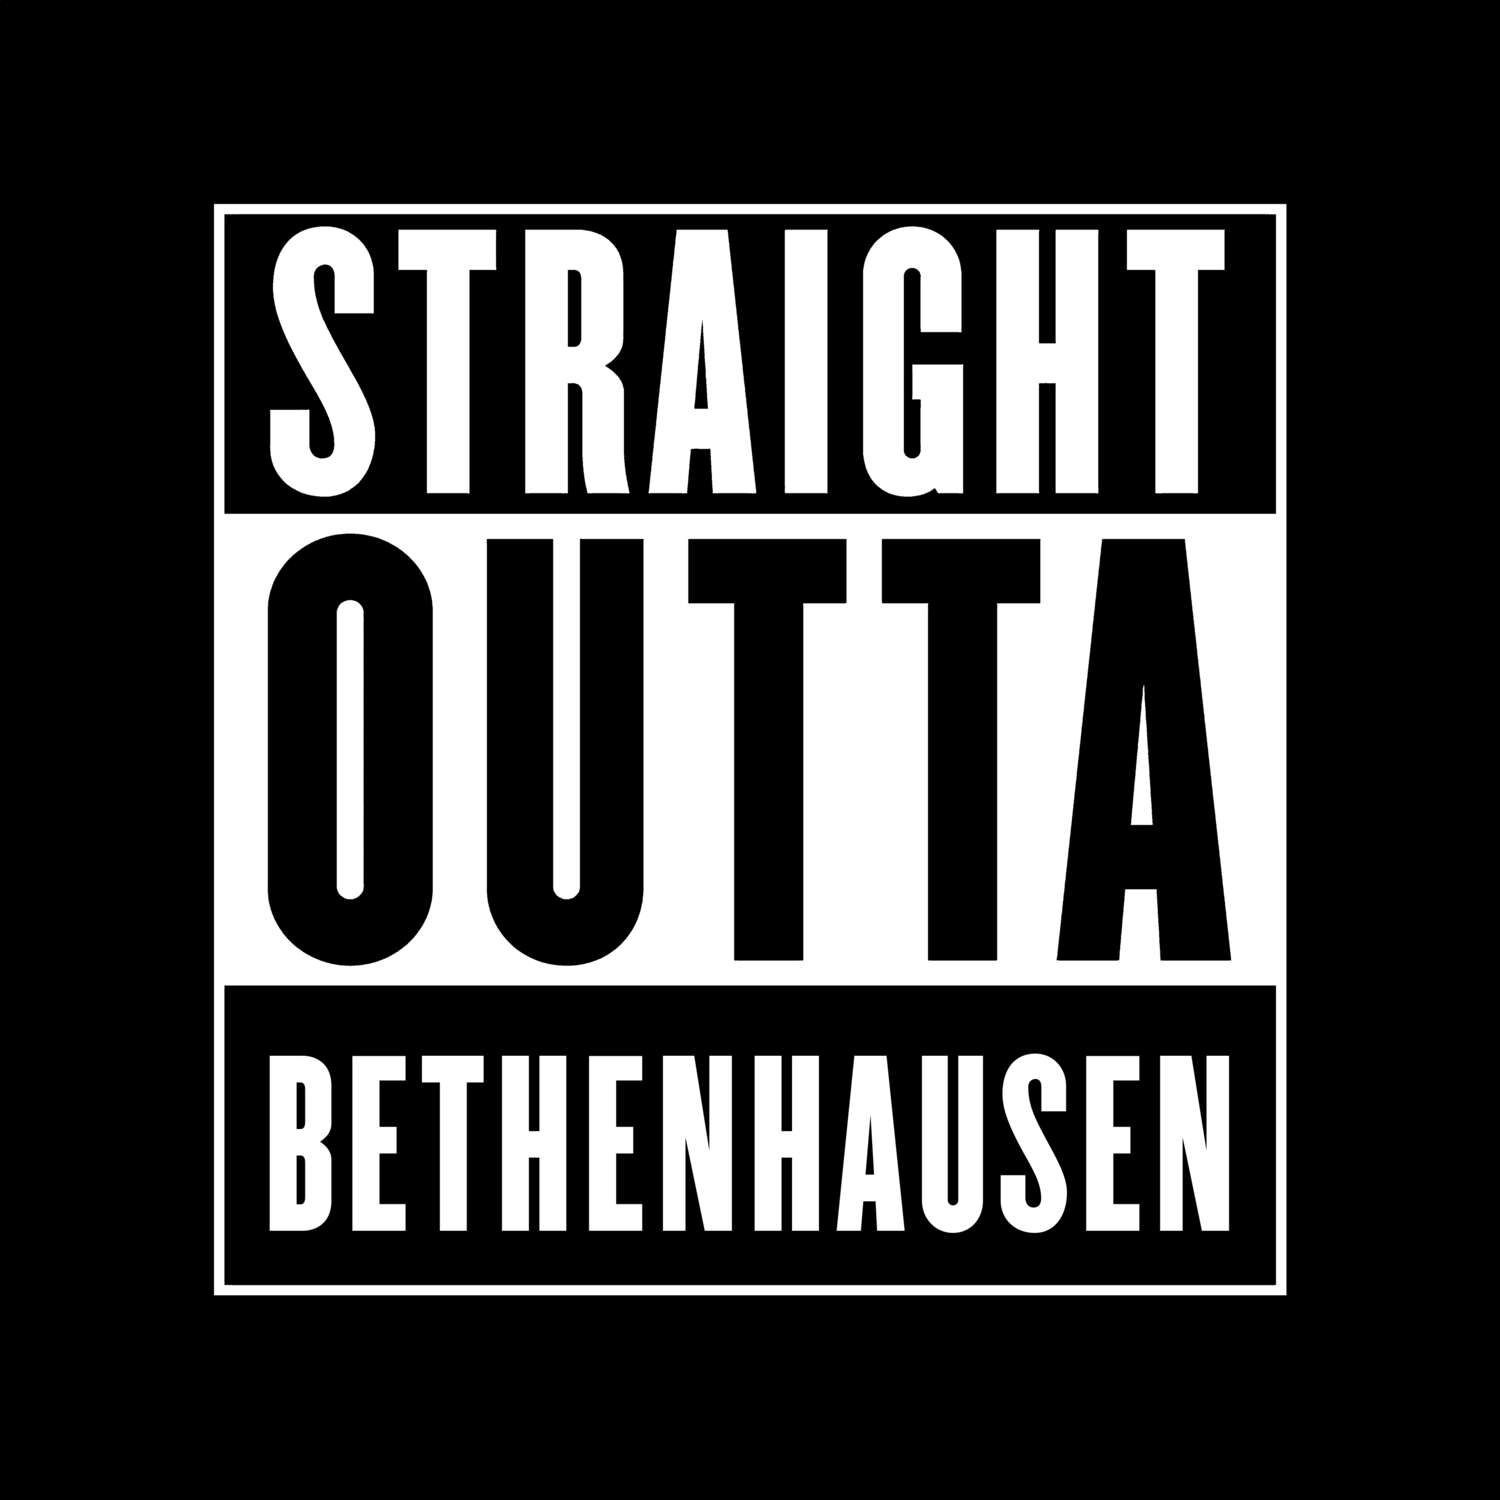 Bethenhausen T-Shirt »Straight Outta«